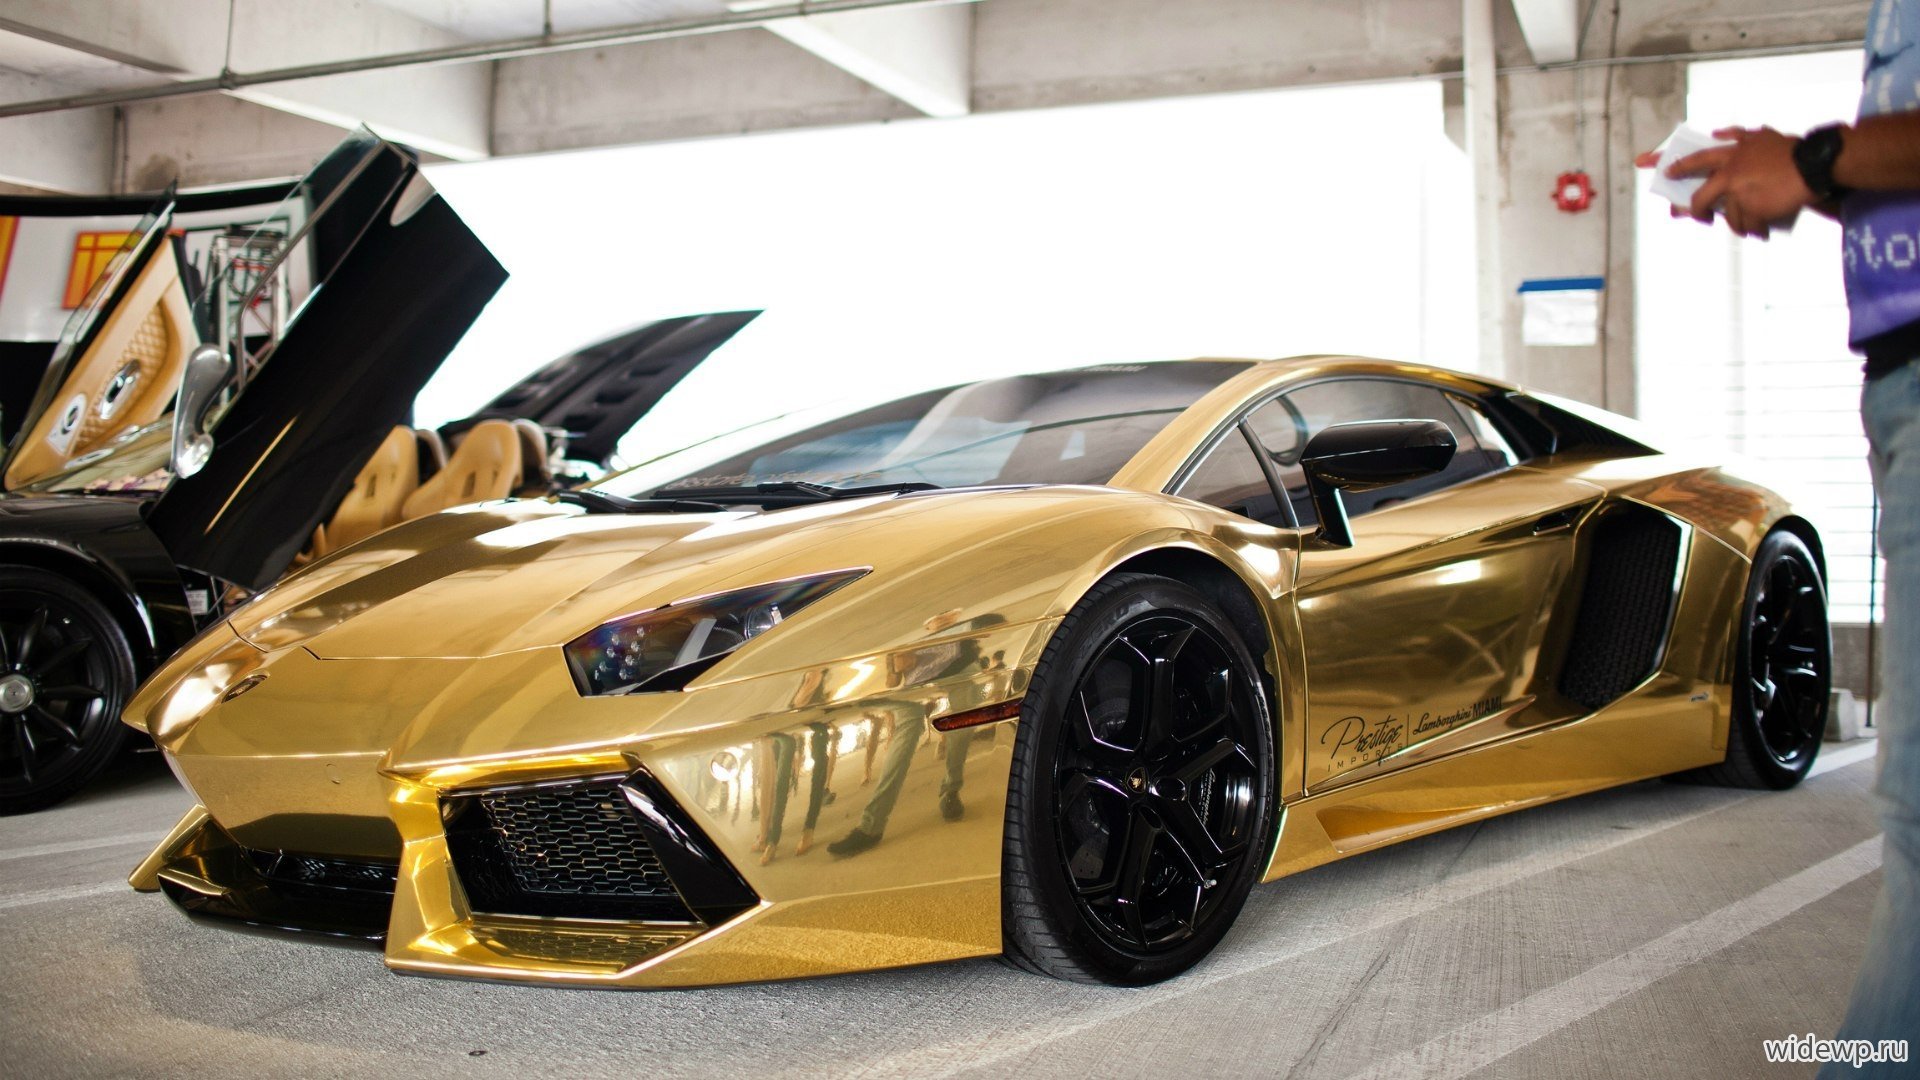 Gold машины. Lamborghini Aventador lp700-4 Золотая. Lamborghini Aventador LP 700-4 из золота. Золотой Бугатти Ламборджини. Lamborghini Aventador Gold.